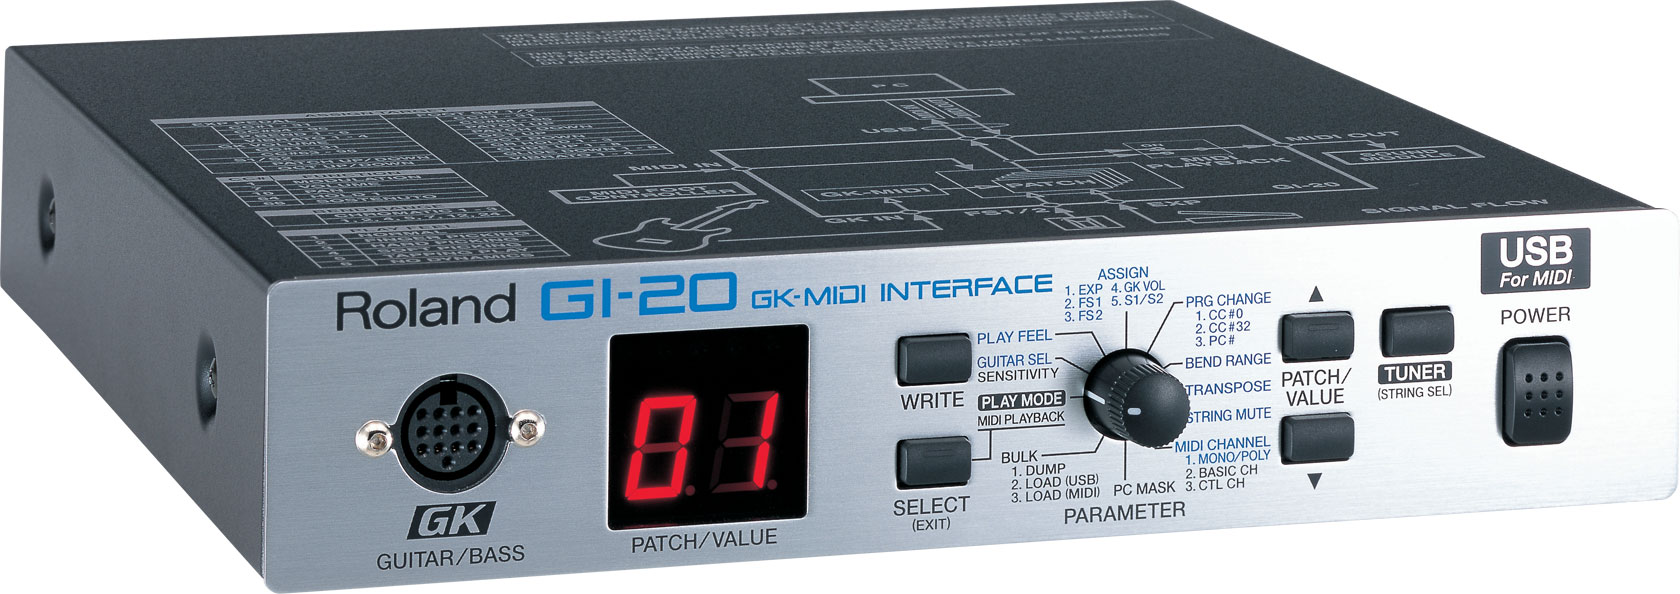 Legend fence Plenary session Roland - GI-20 | GK-MIDI Interface